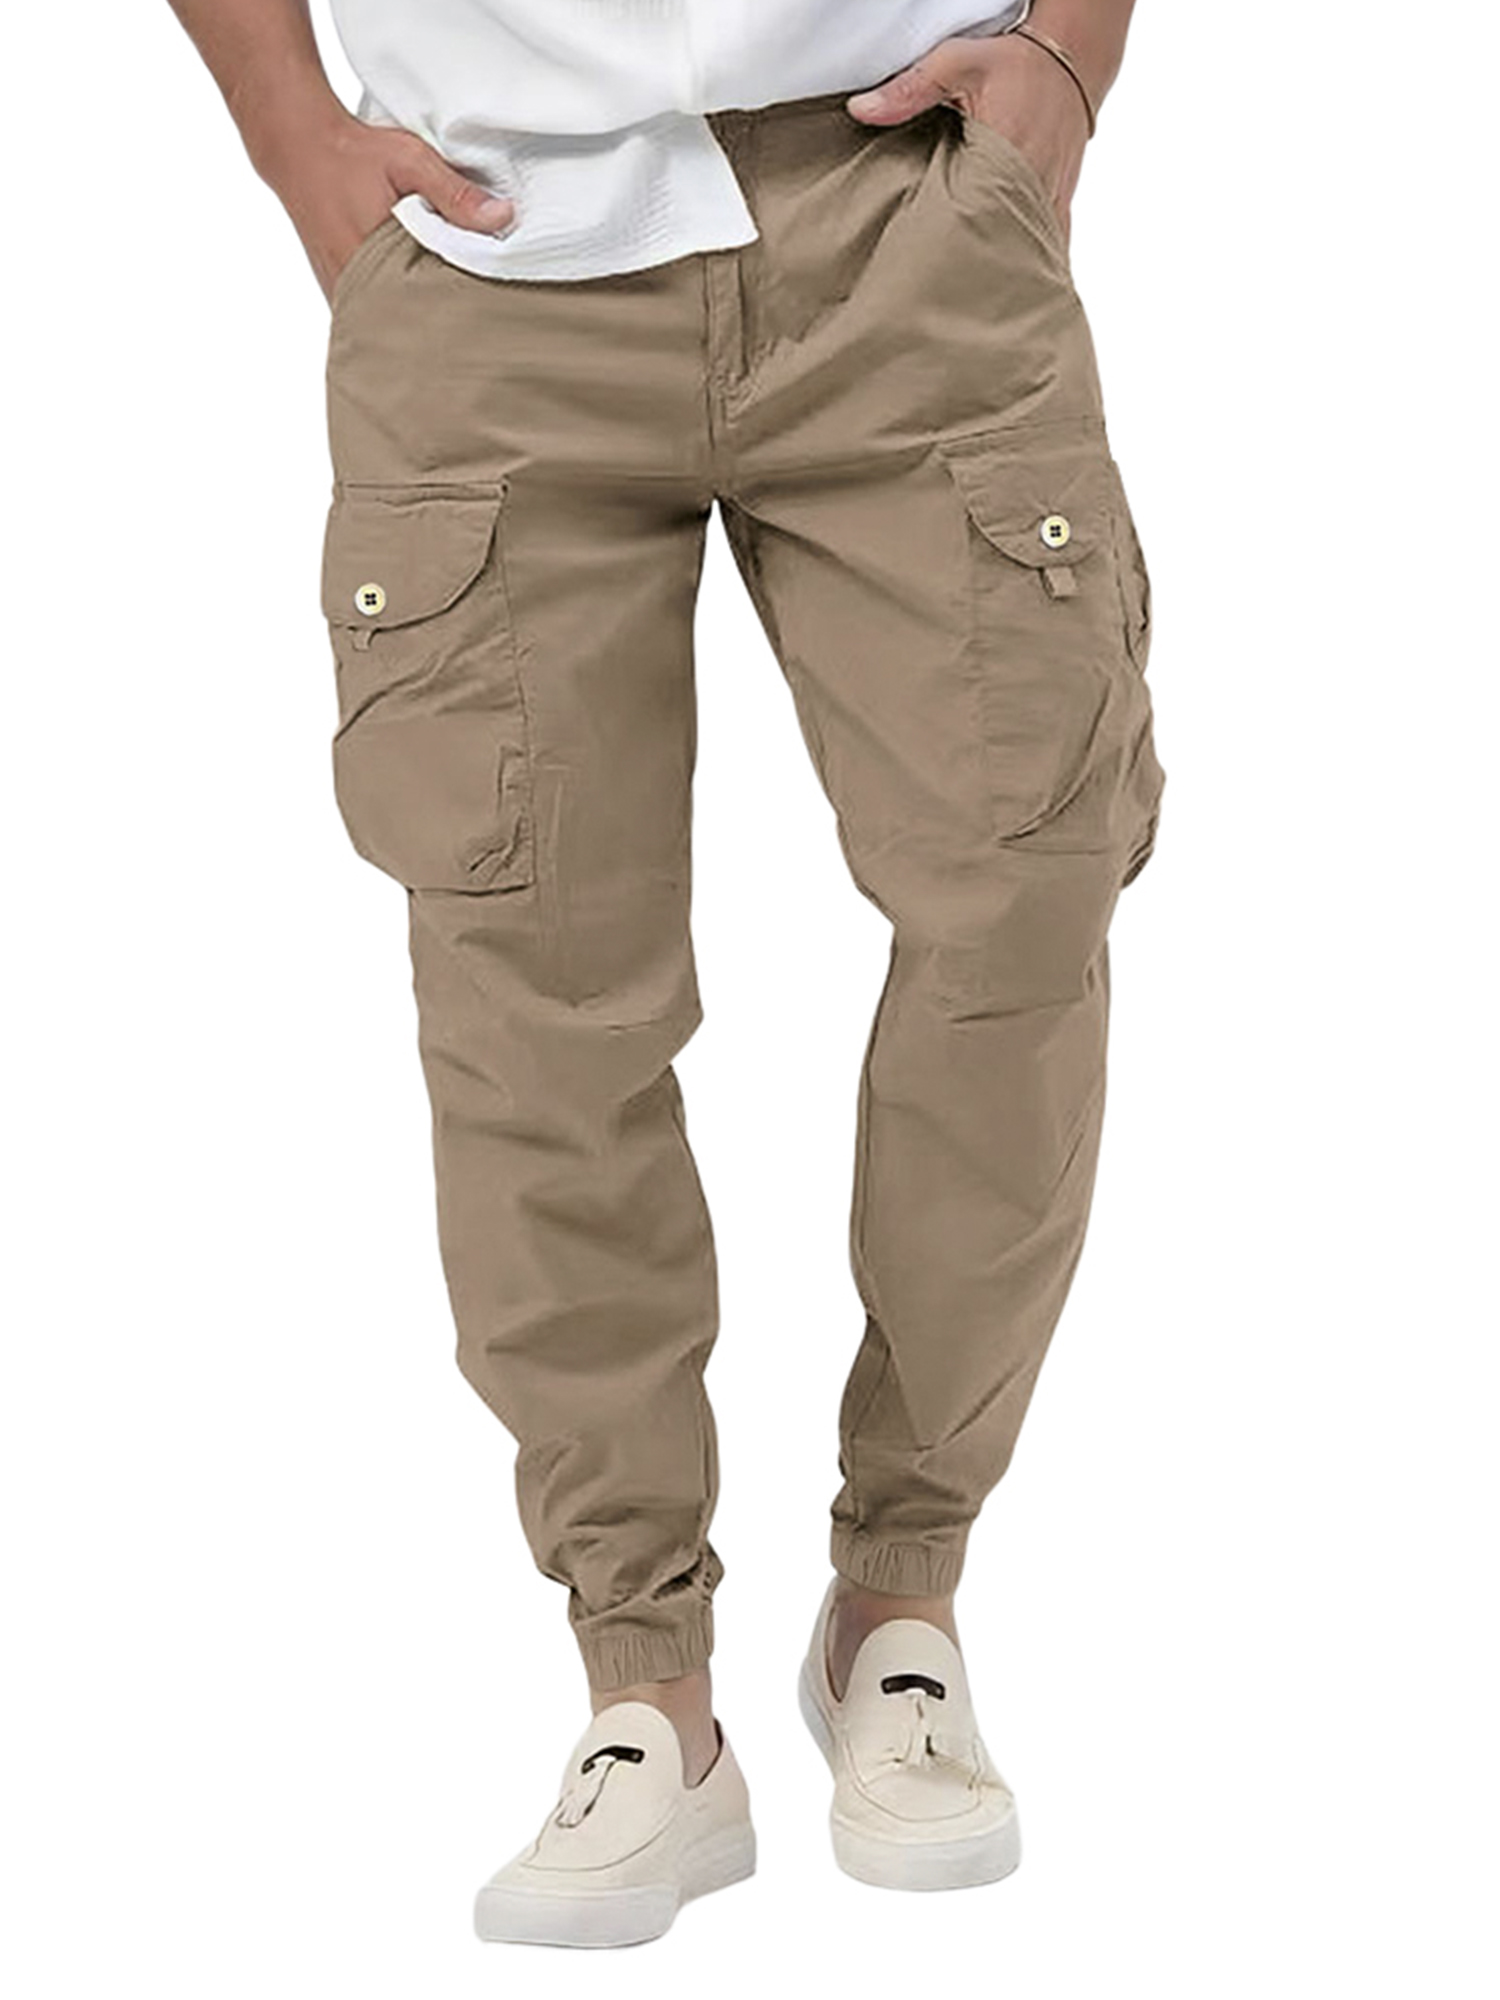 Julycc Mens Outdoor Hiking Tactical Trousers Multipel Pockets Combat ...